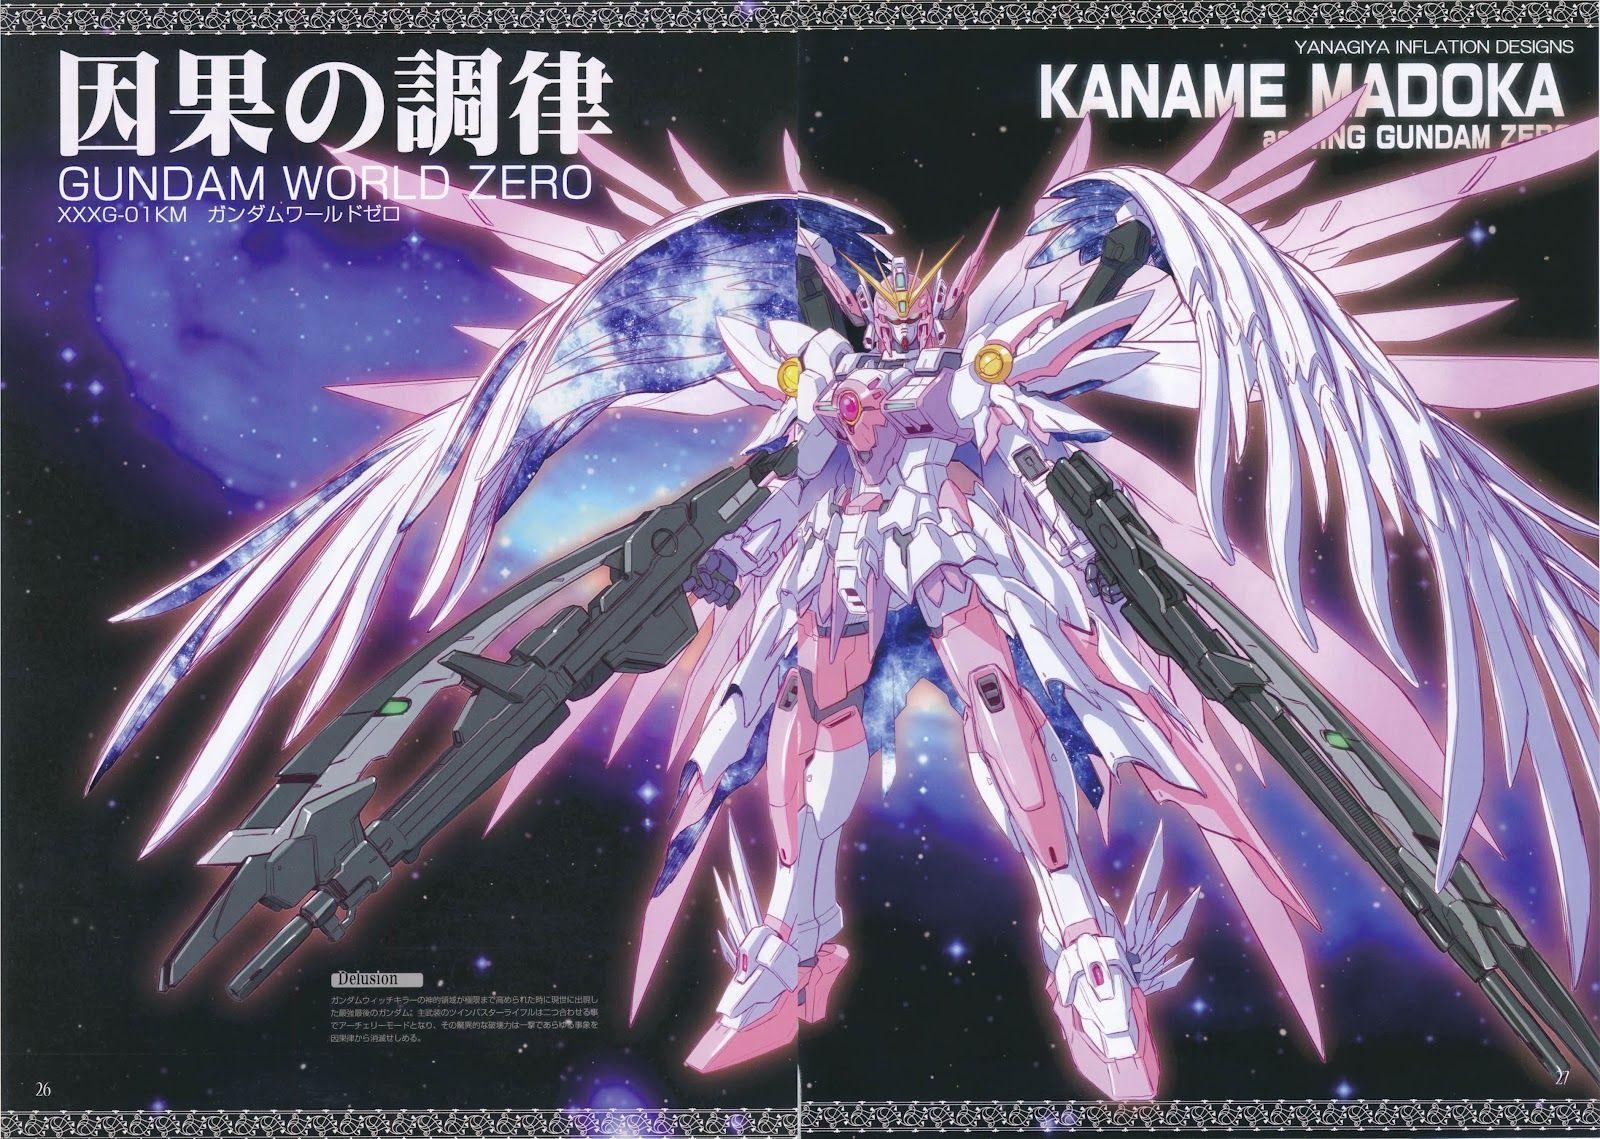 Mg Wing Gundam World Zero Ew Ver Ka Build Retrospective Saint Ism Gaming Gunpla Digital Art